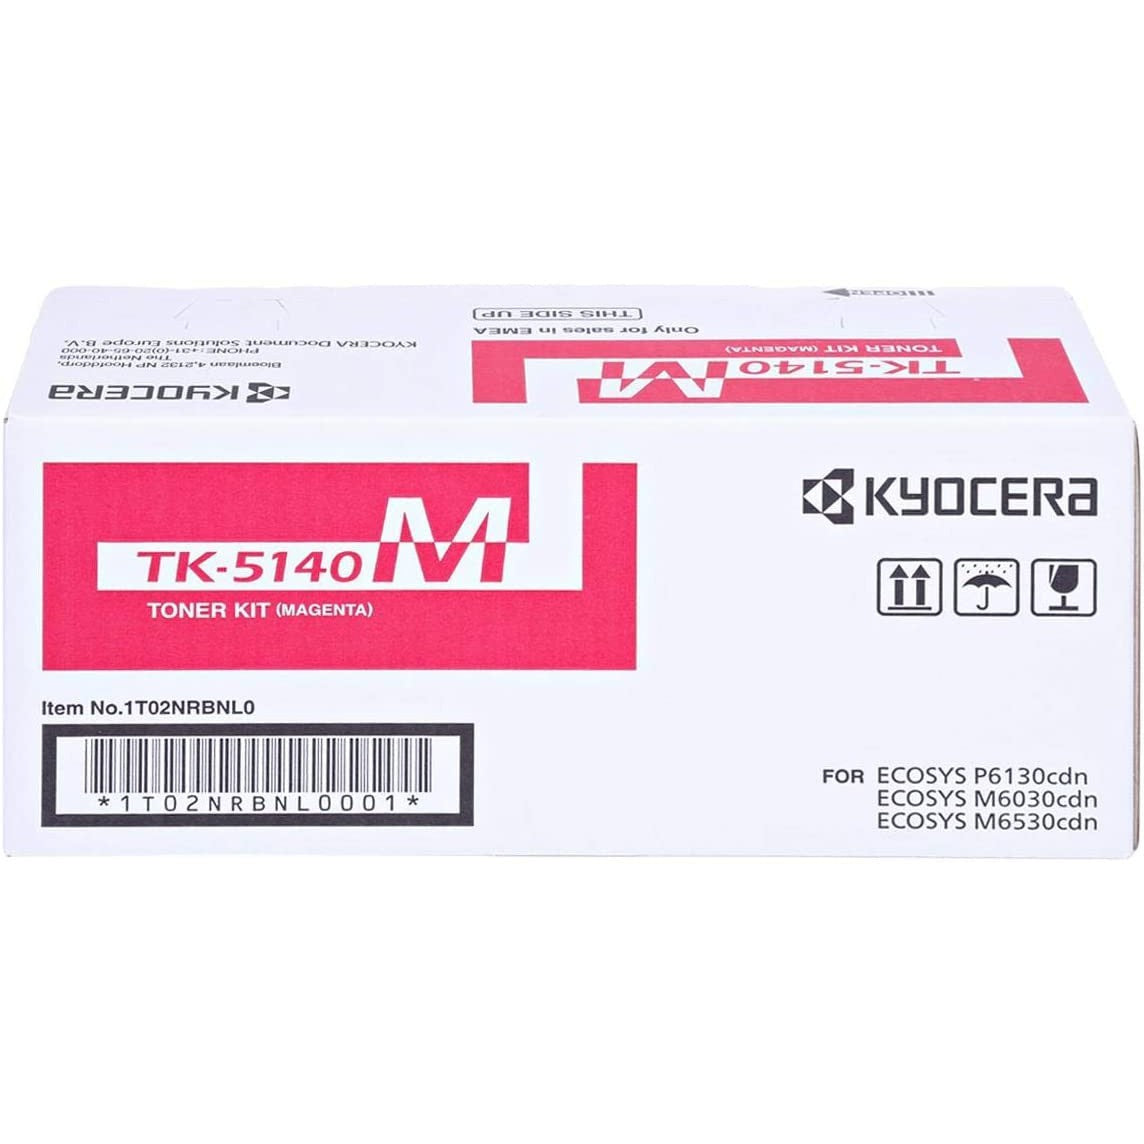 Kyocera Tk 5140 Magenta Toner Cartridge-Inks And Toners-Kyocera-Star Light Kuwait